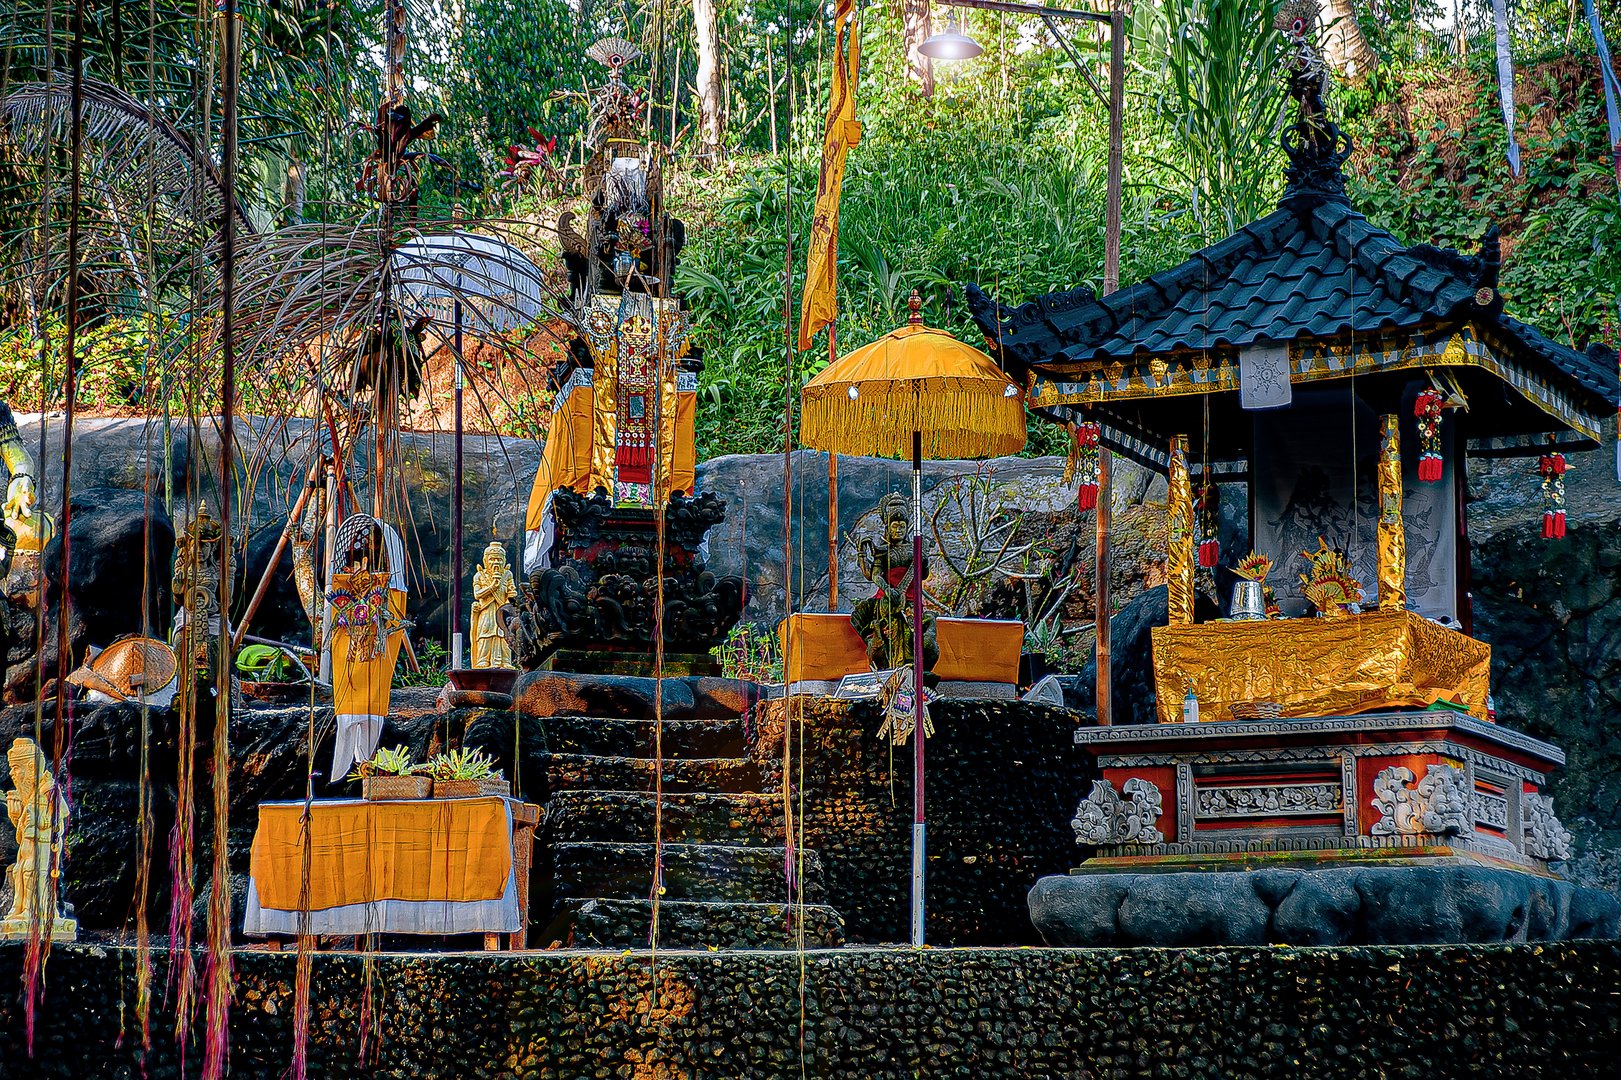 Hindu shrine in the jungle